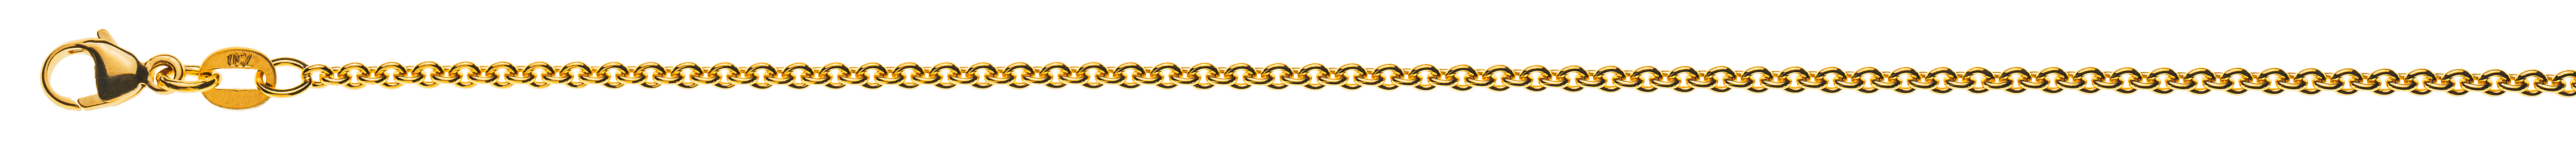 AURONOS Prestige Necklace Yellow Gold 18K Round Anchor 42cm 1.9mm